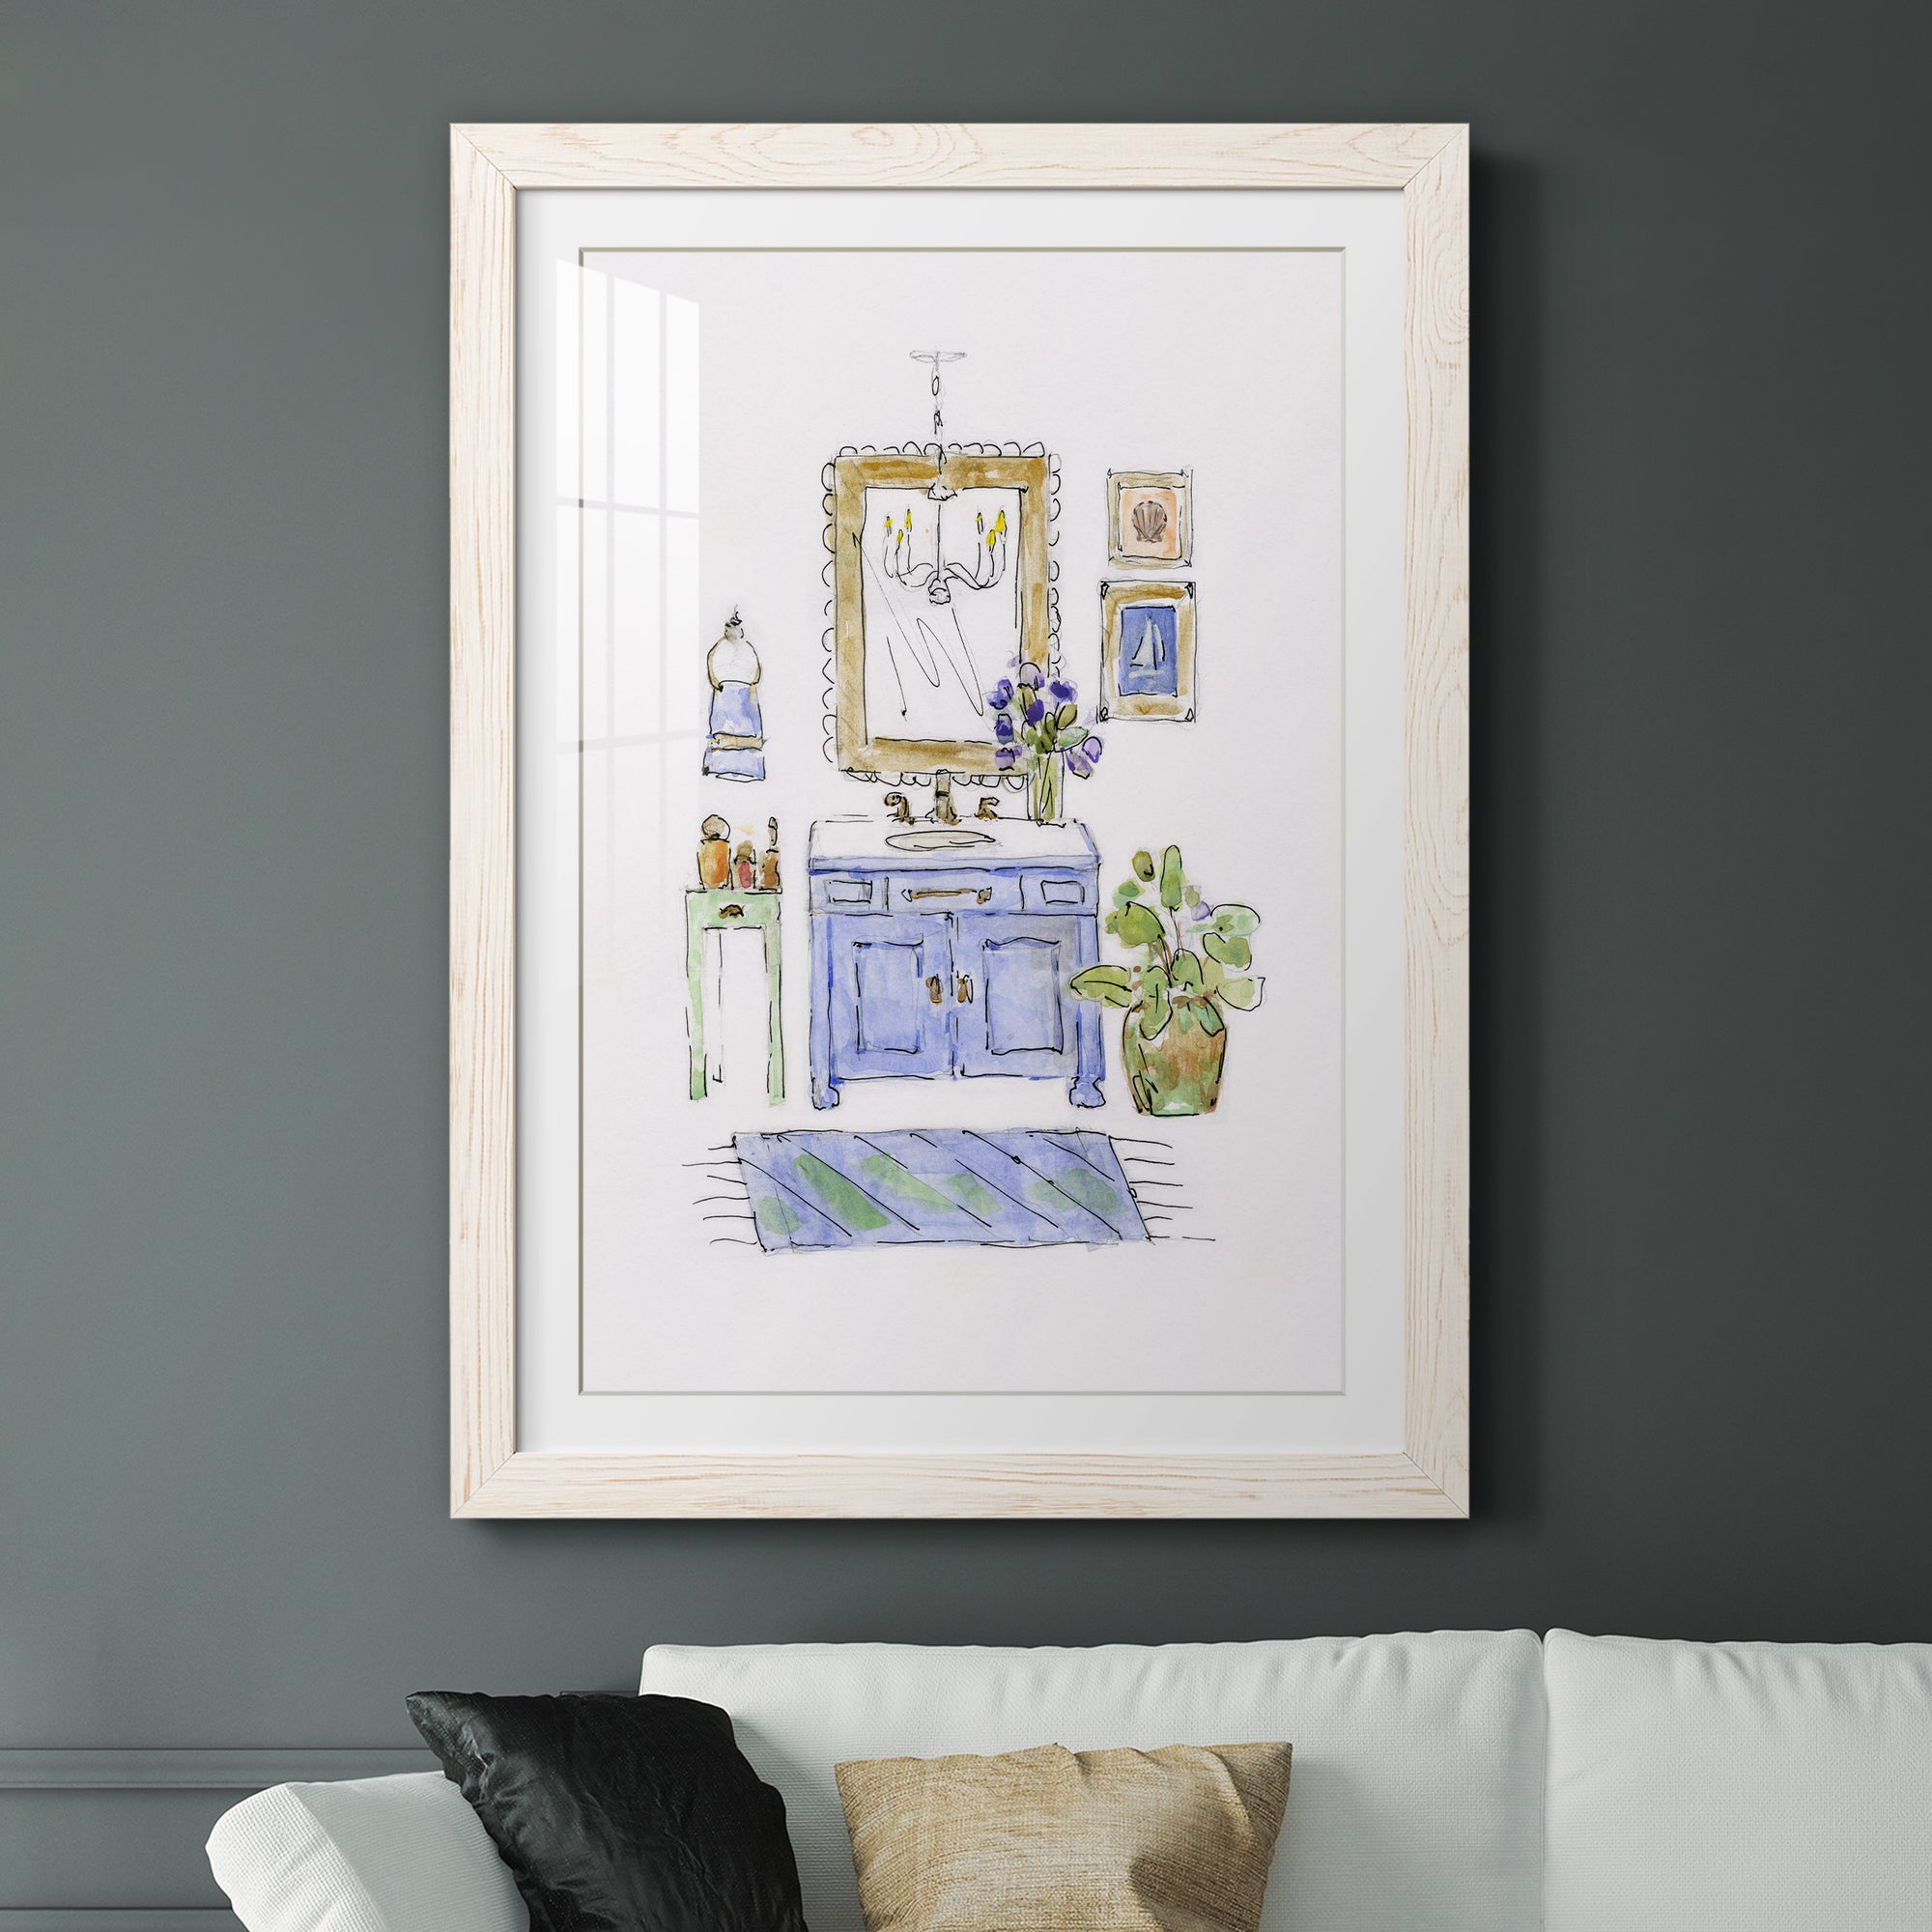 Sketchy Bath II - Premium Framed Print - Distressed Barnwood Frame - Ready to Hang